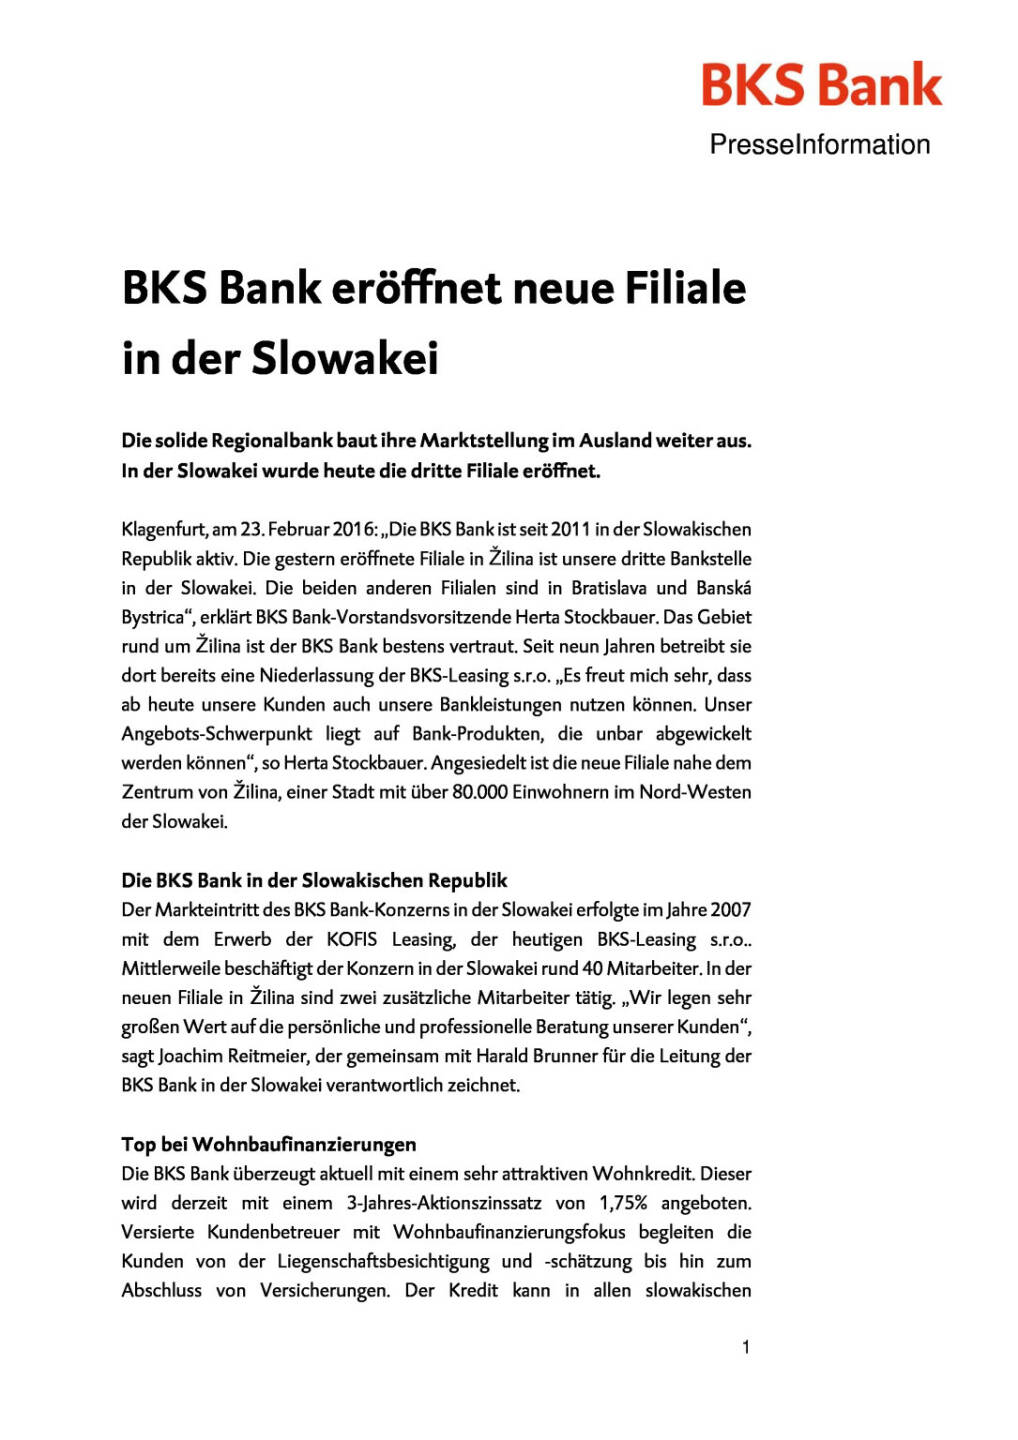 BKS Bank eröffnet neue Filiale in der Slowakei, Seite 1/2, komplettes Dokument unter http://boerse-social.com/static/uploads/file_671_bks_bank_eroffnet_neue_filiale_in_der_slowakei.pdf